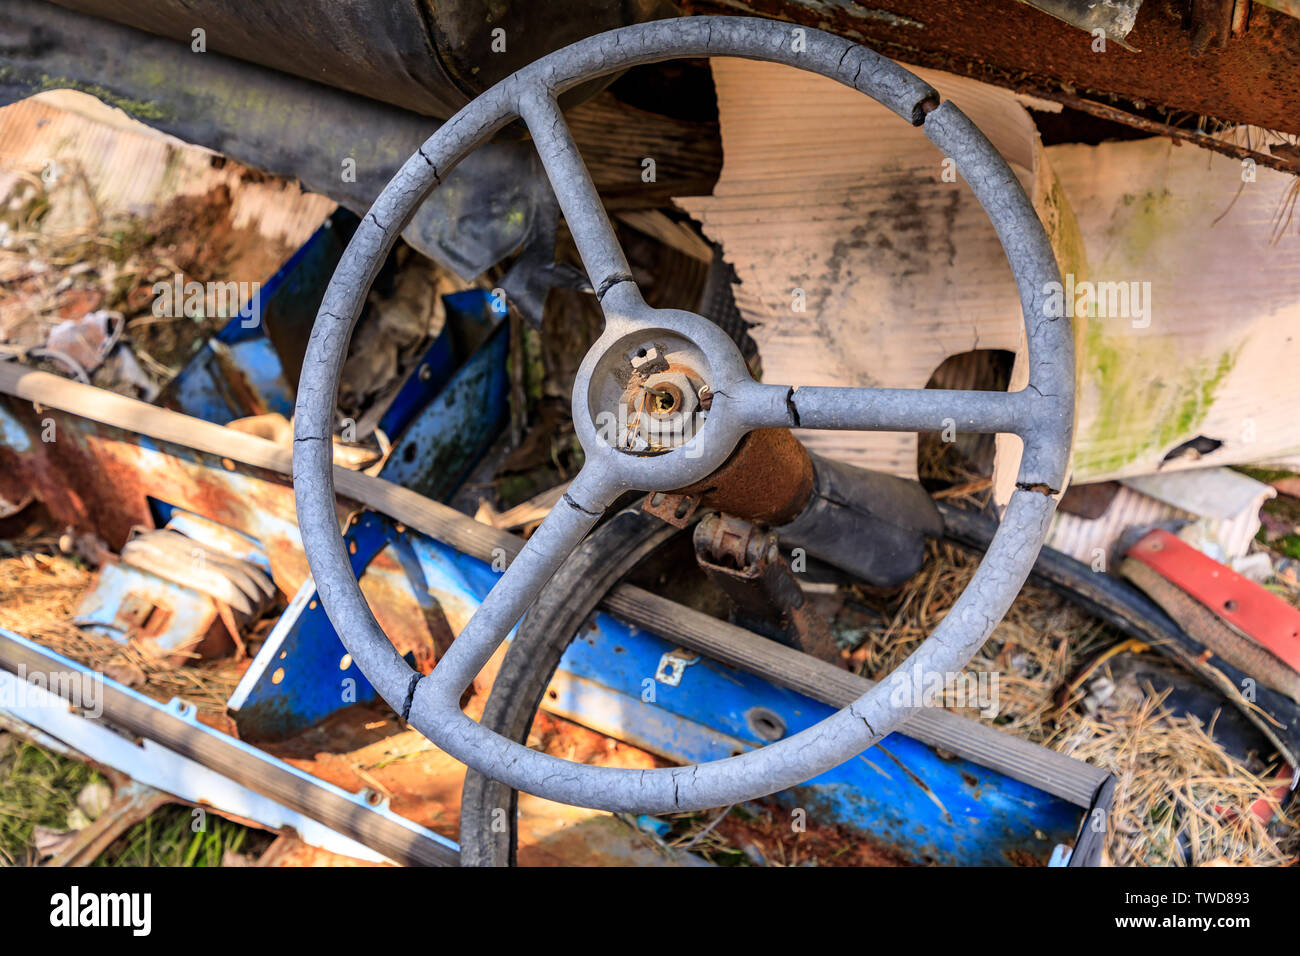 Eastern Europe, Ukraine, Pripyat, Chernobyl. Rusted trucks and vehicles. Steering wheel. Stock Photo